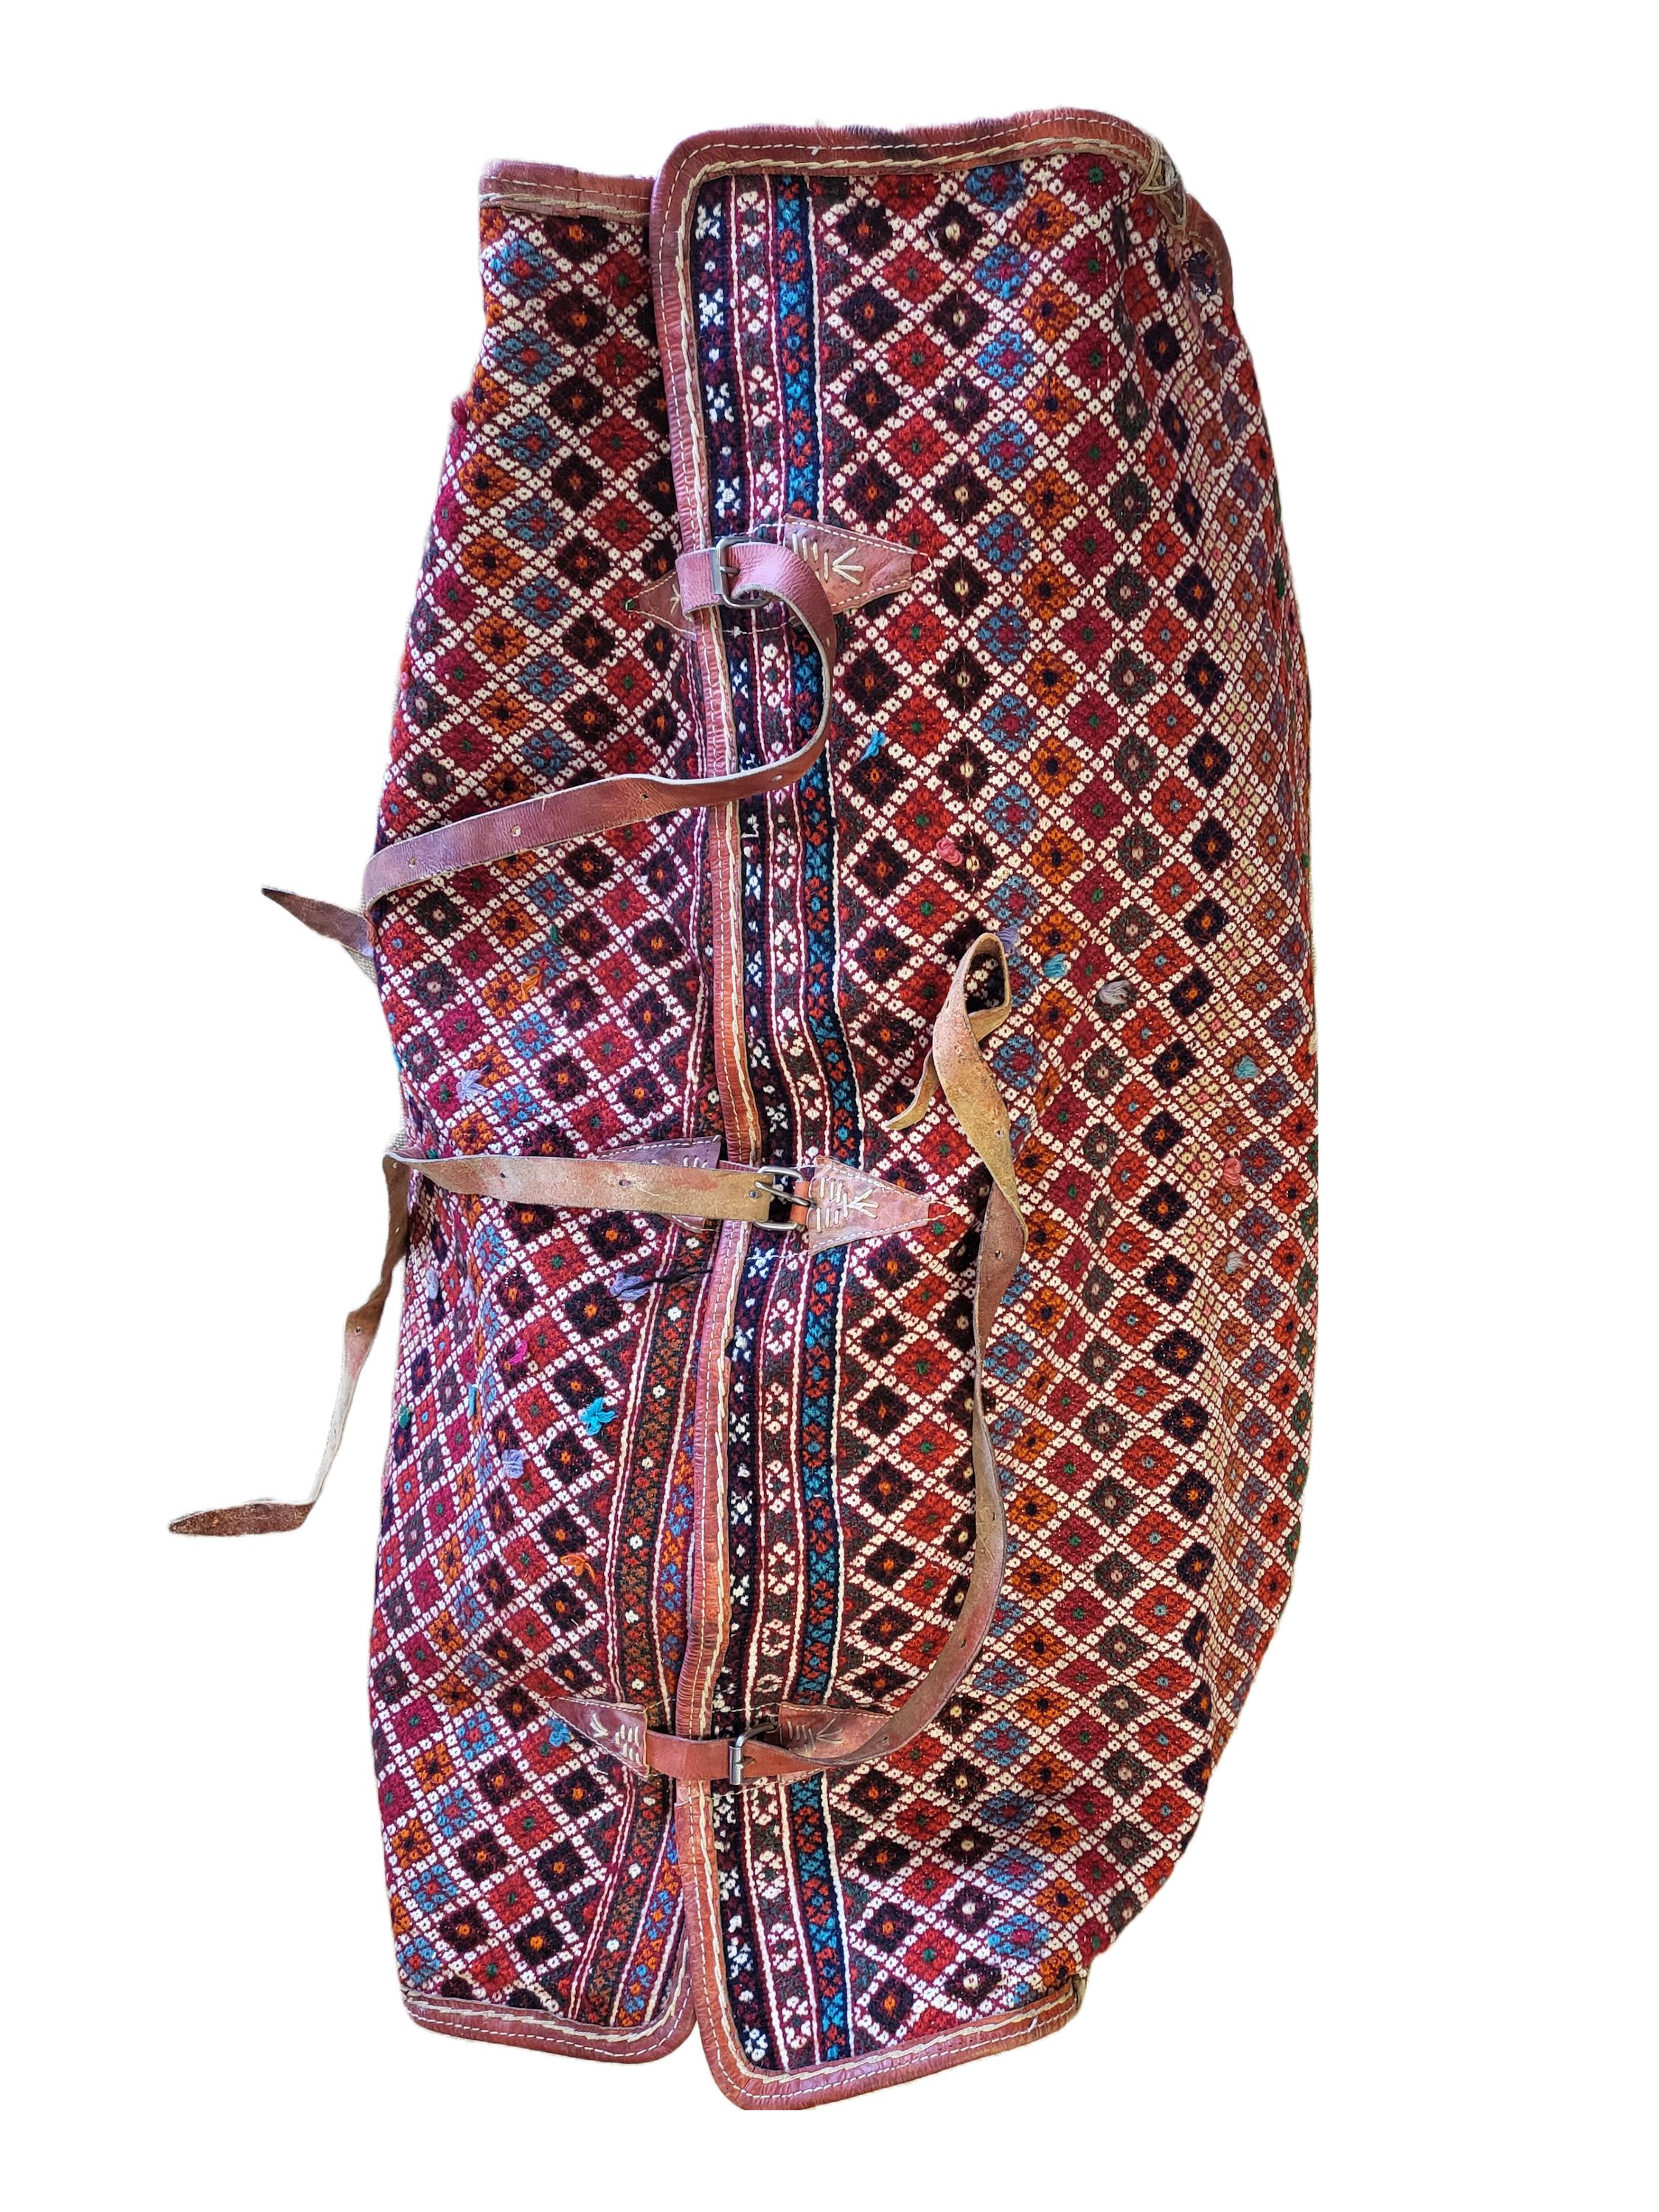 Tribal Antique Persian Qashqai - Rare Large Nomadic Saddle Bag -  For Sale